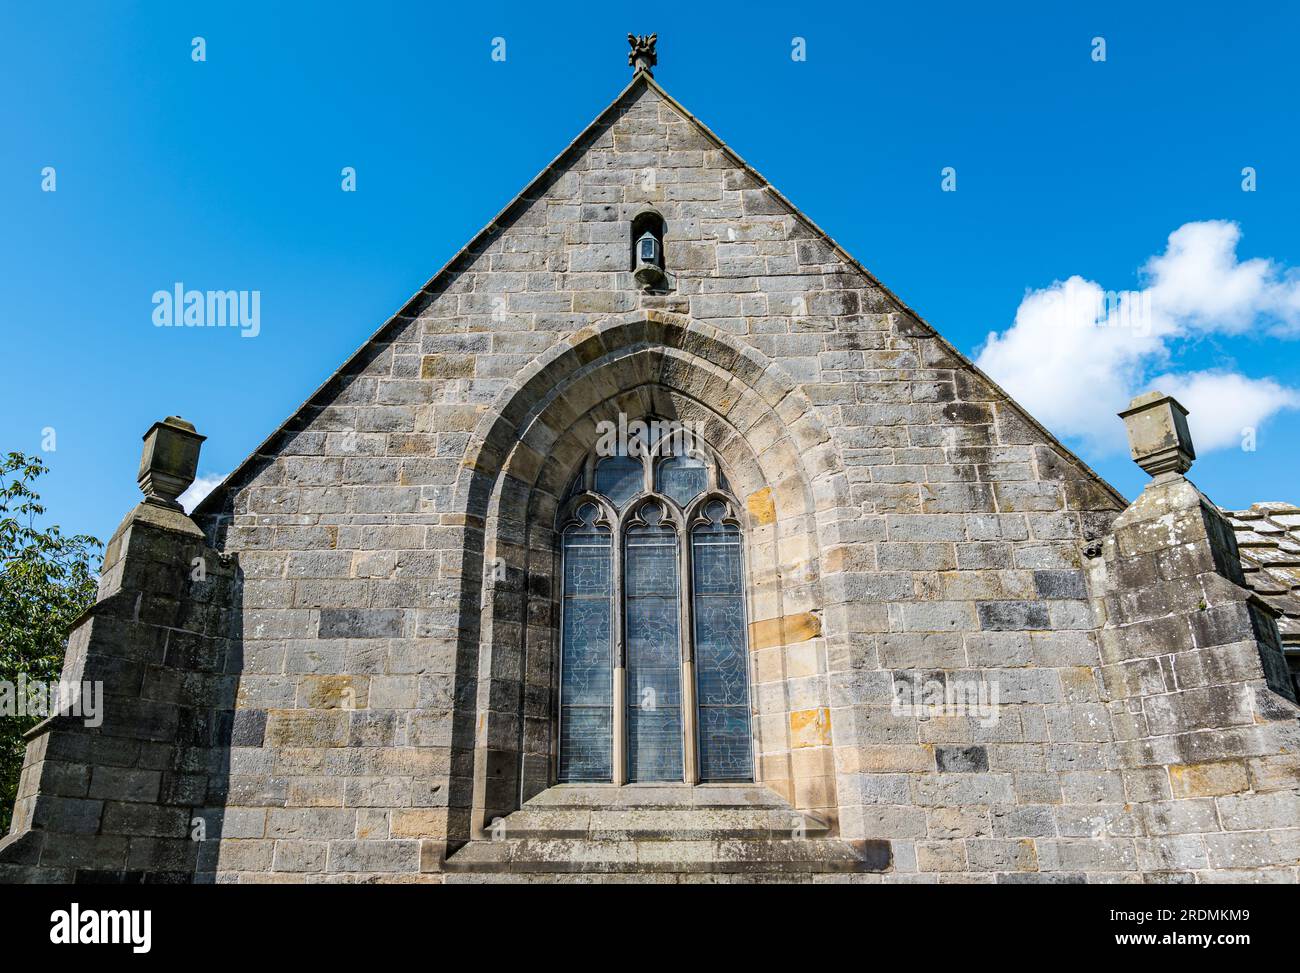 Exterior of Corstorphine Old Parish Church with stained glass window and historic lantern, Edinburgh, Scotland, UK Stock Photo